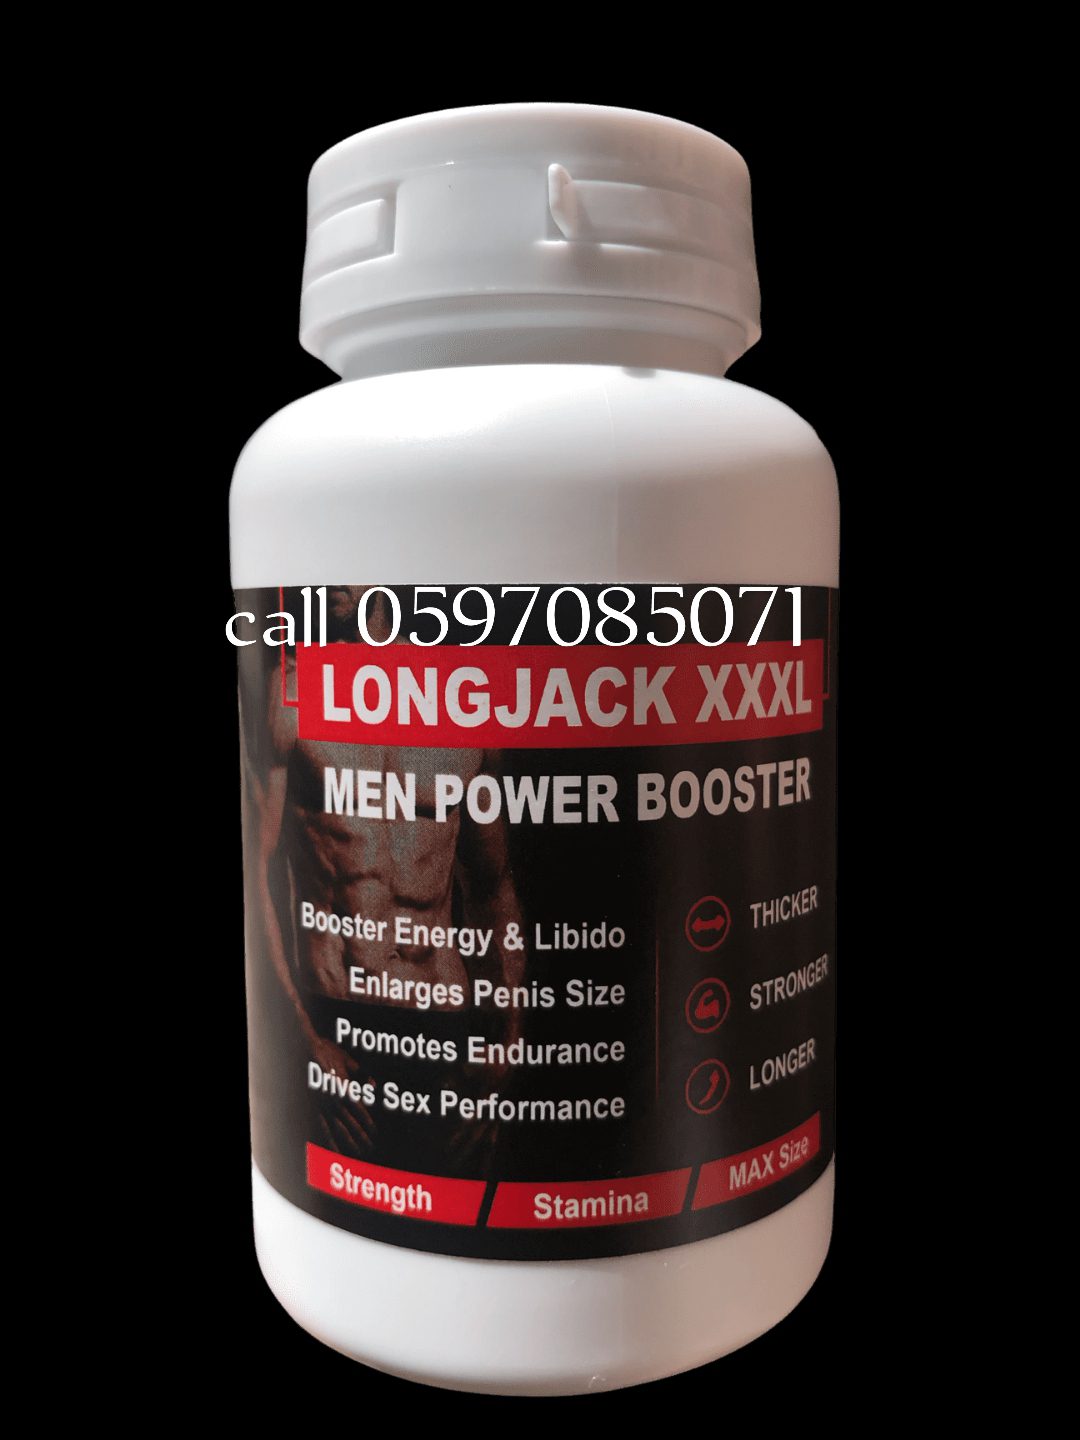 Quality Long Jack Xxxl Ghana Shopbeta